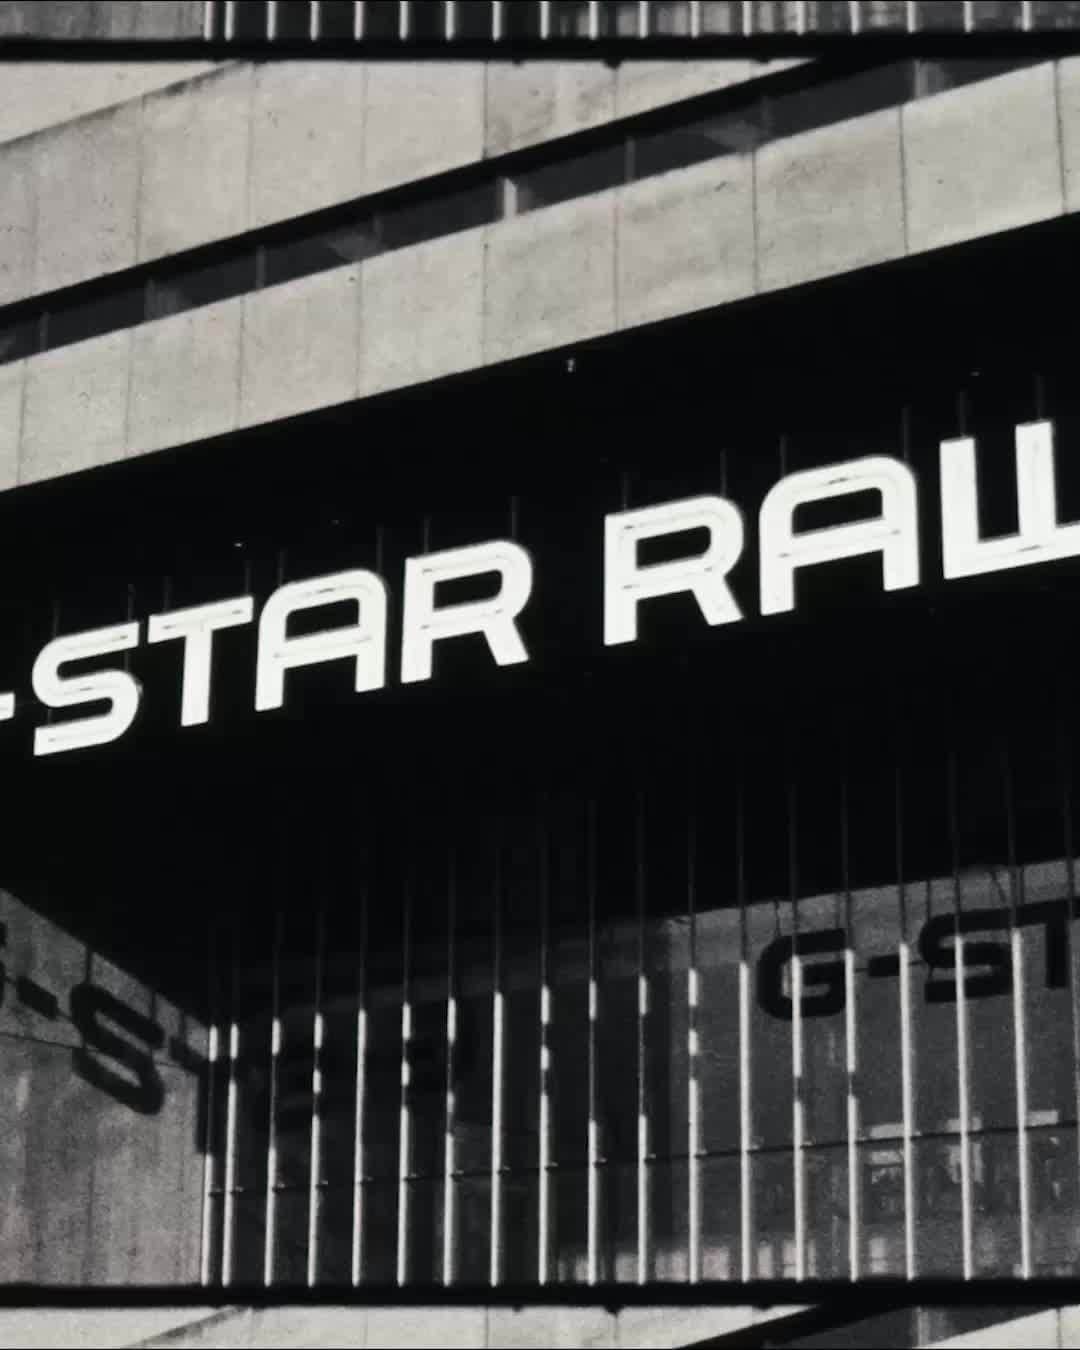 G-Star RAW Japanのインスタグラム